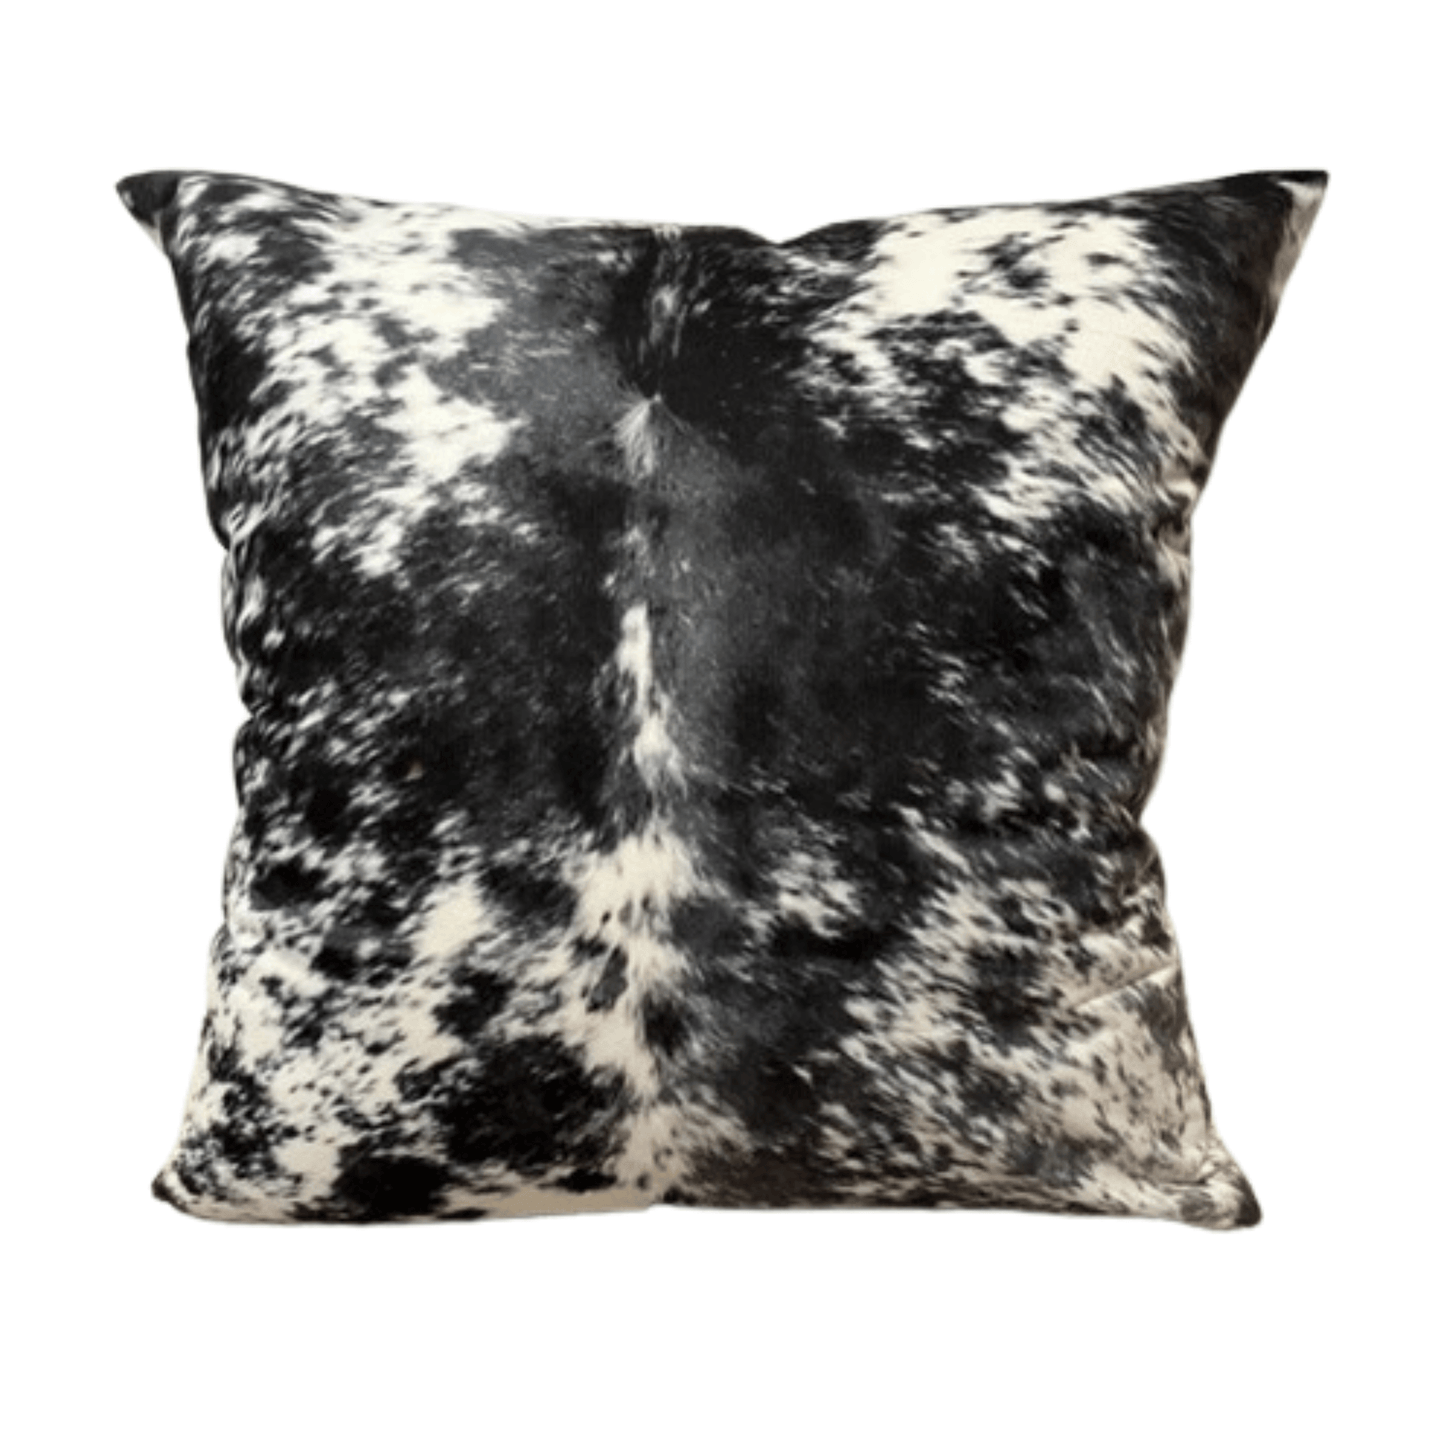 Faux Cowhide Pillow Cover, Cow Print Pillow, Black & Grey Cowhide